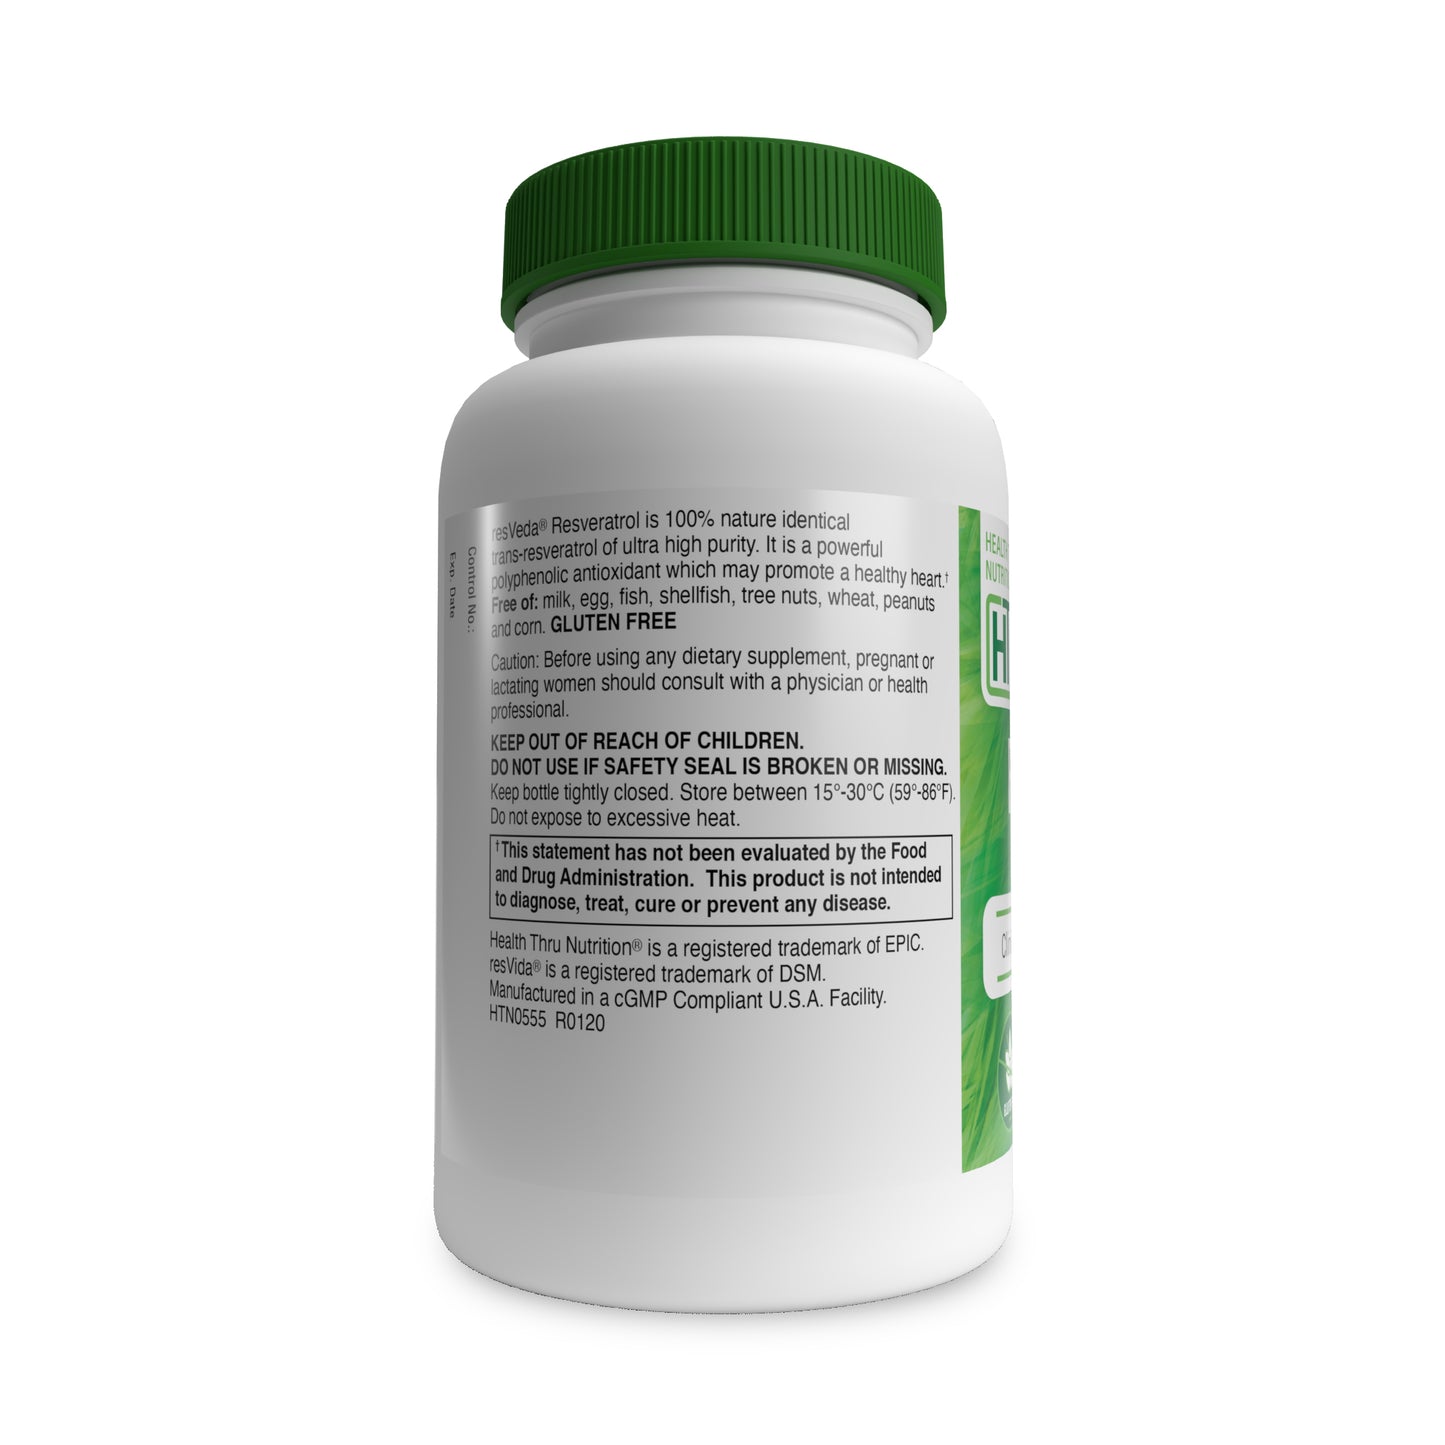 Resveratrol (ResVida®) 100mg 60 Softgels